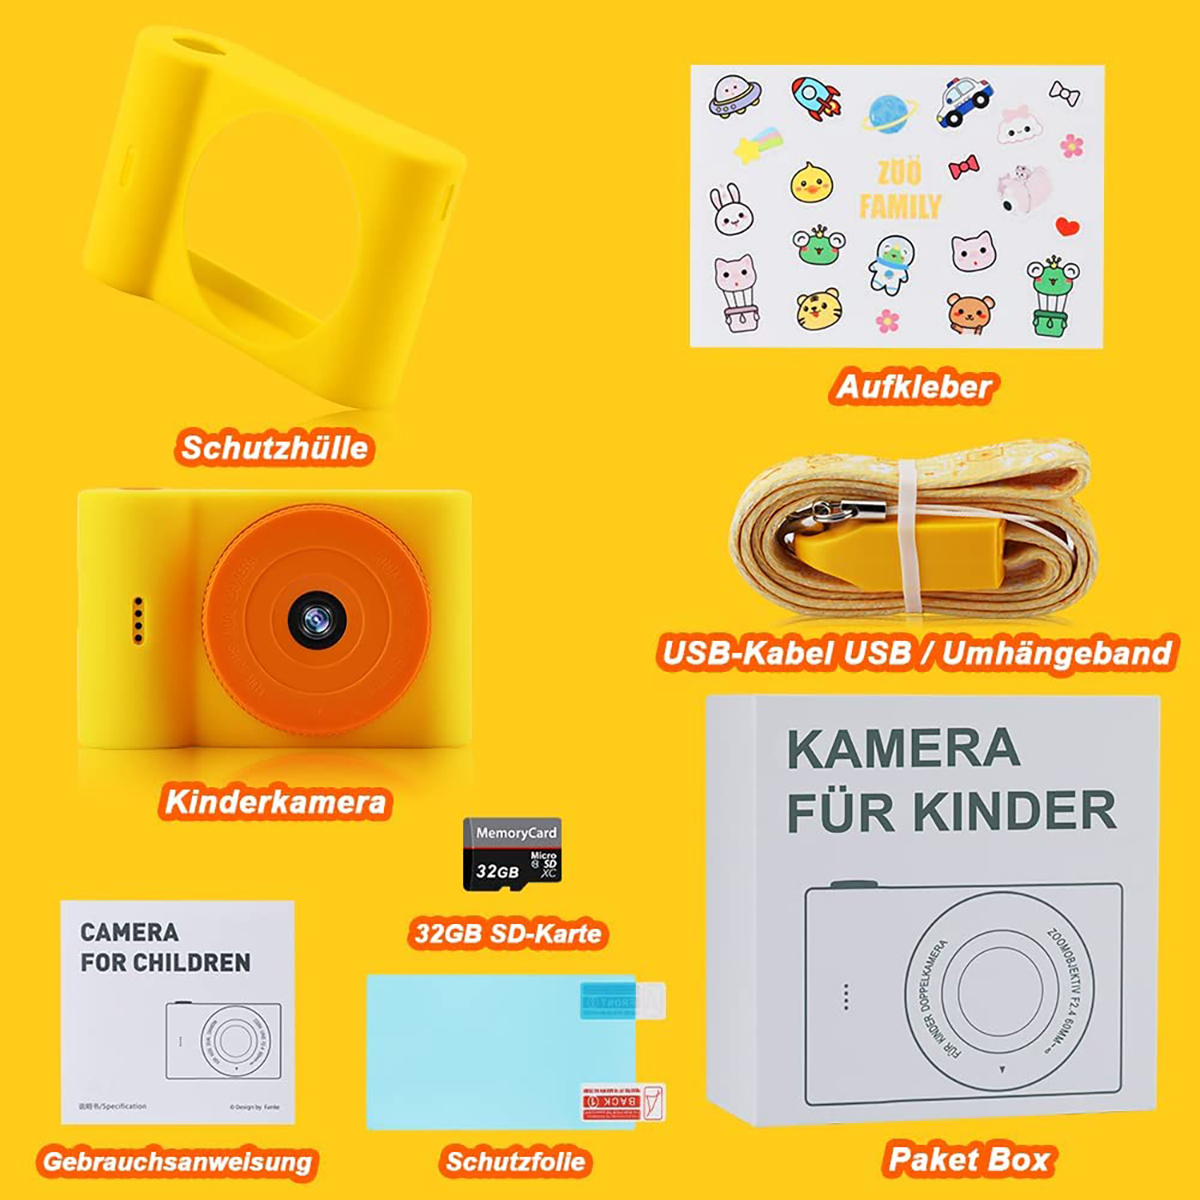 Kinderkamera PRO SD-Karte LIFE DigitalKamera Gelb- Kinderkamera,48MP,1080P,WiFi Fotokamera,32GB FINE